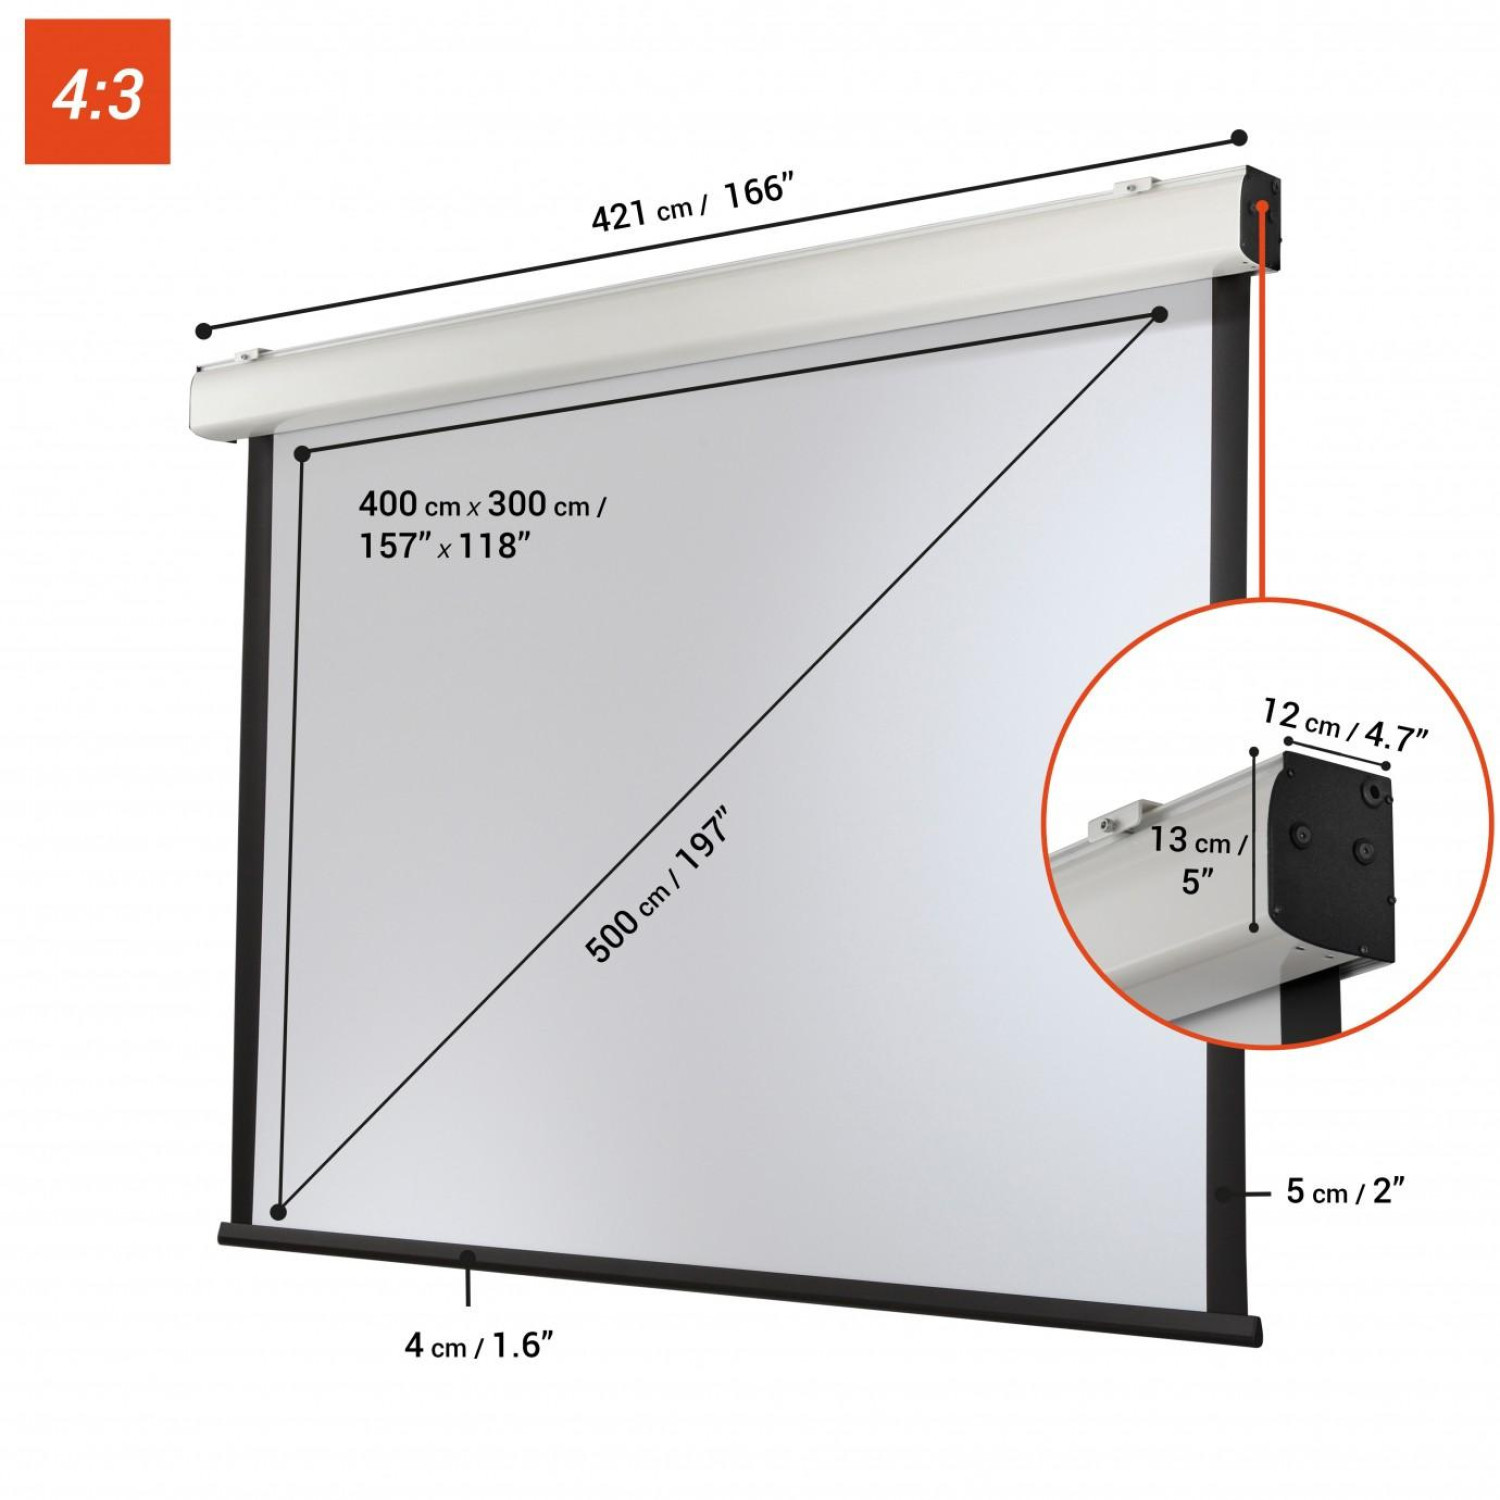 Електрически екран за стена CELEXON Electric Expert XL, 400 x 300 cm, 4:3, matt white, PVC